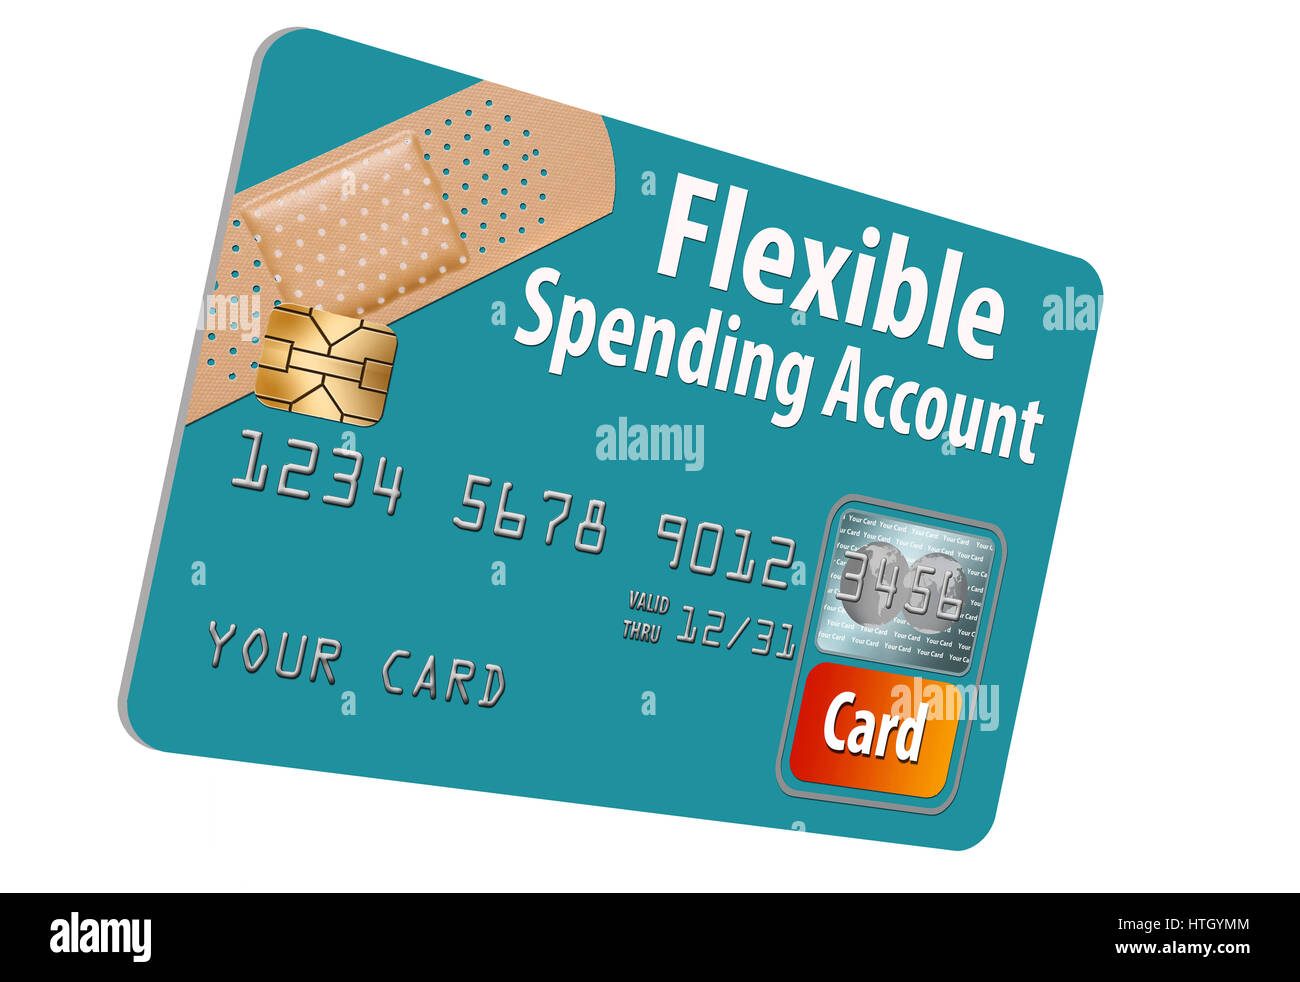 https://c8.alamy.com/comp/HTGYMM/fsa-debit-card-flexible-spending-account-HTGYMM.jpg